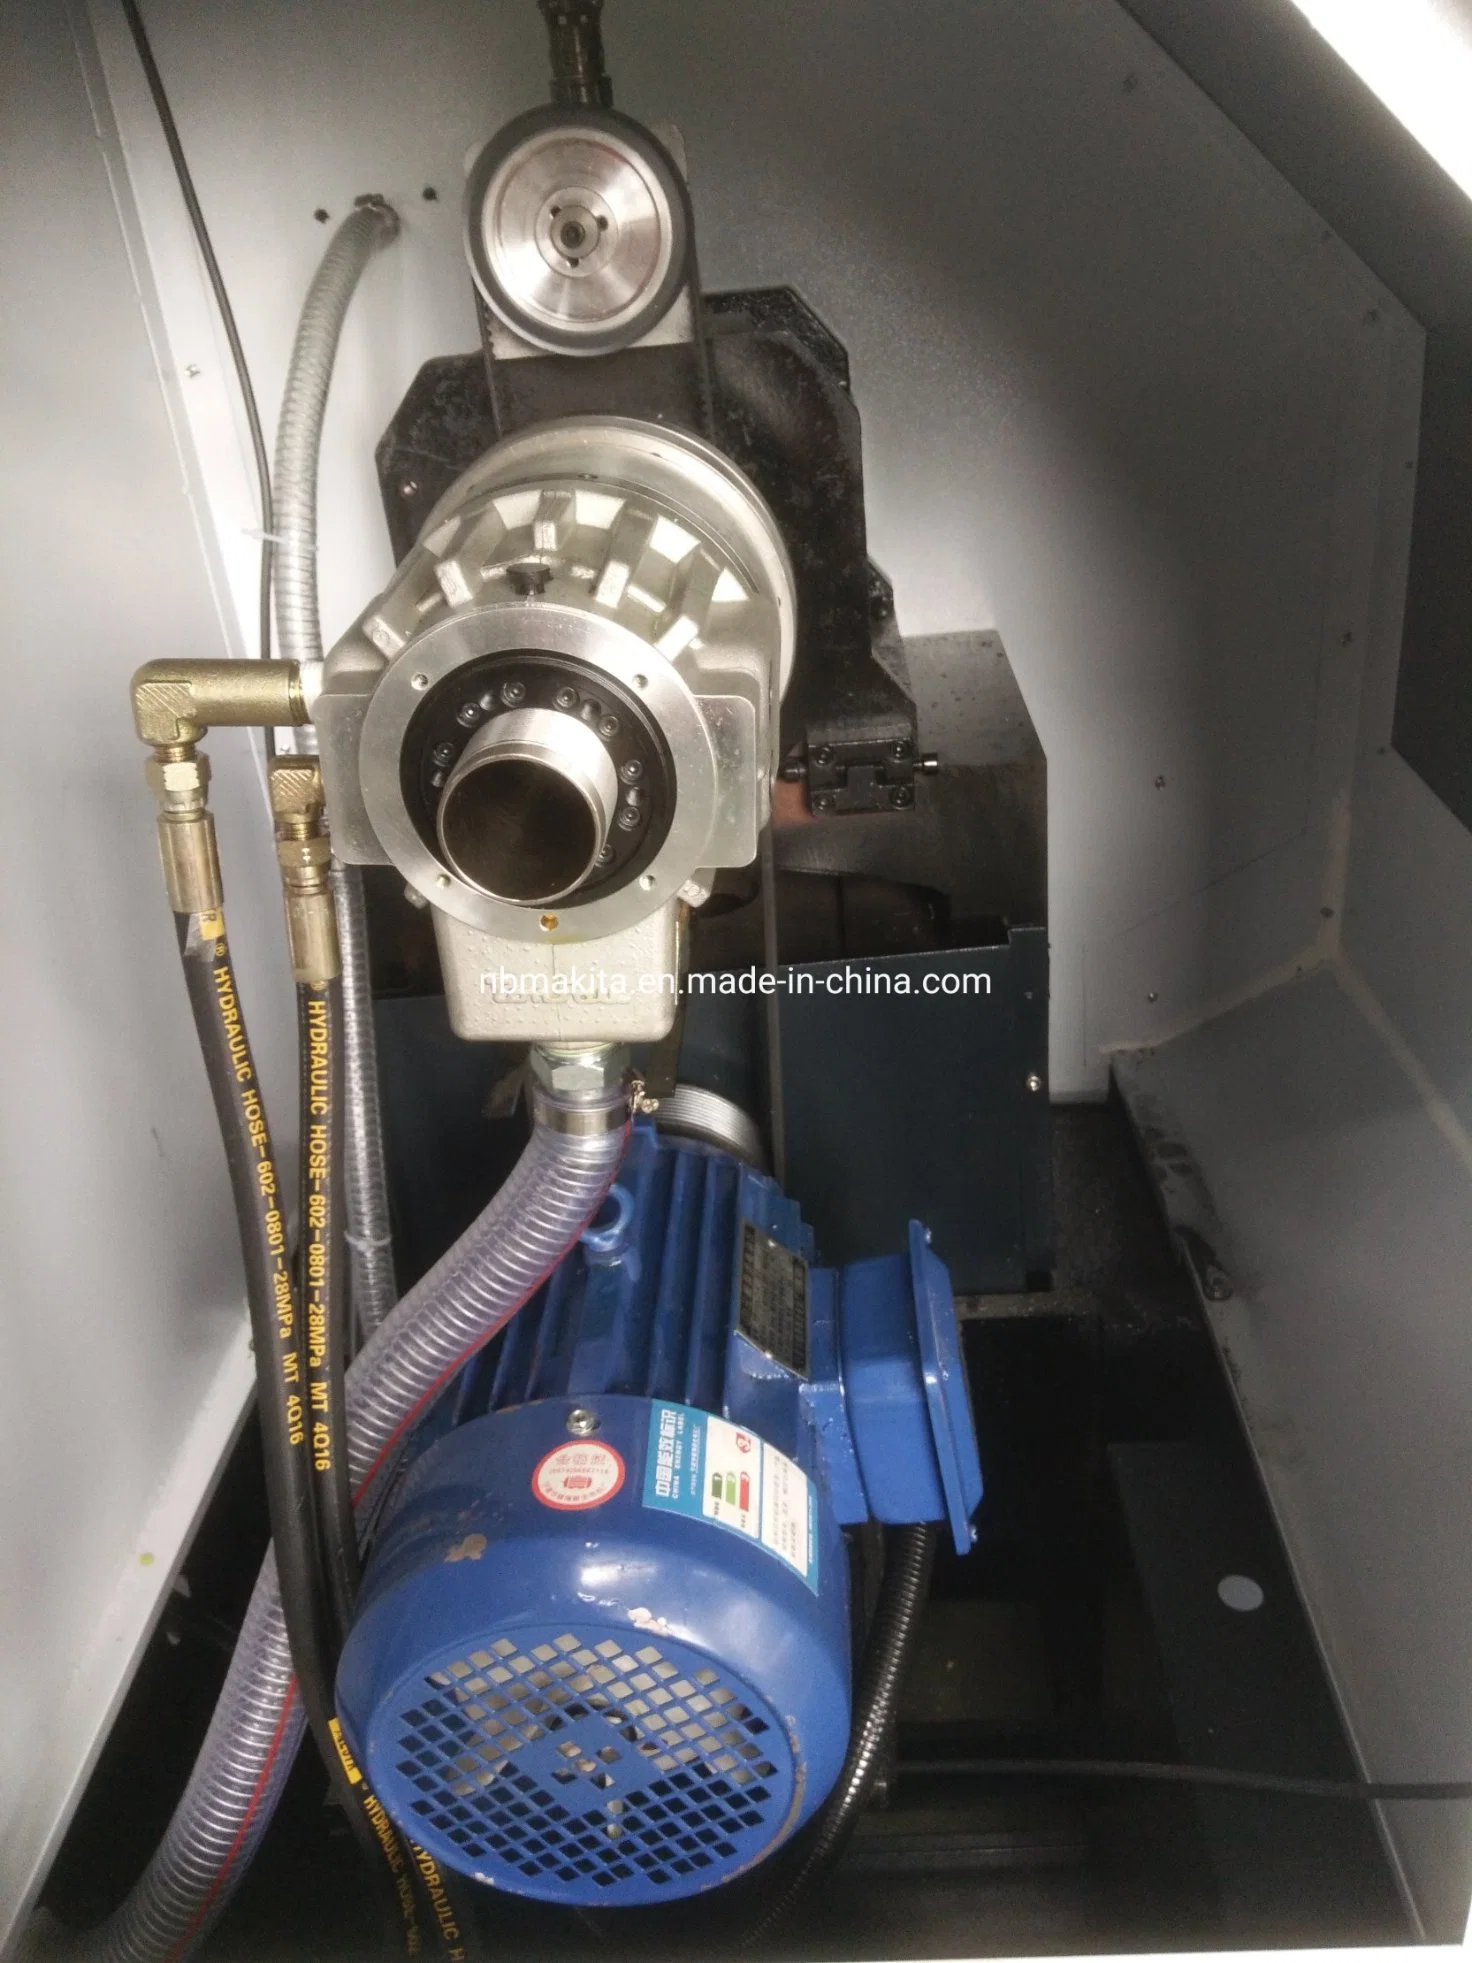 Flat Bed Economic Automatic Metal Cutting Precision CNC Machine Tools